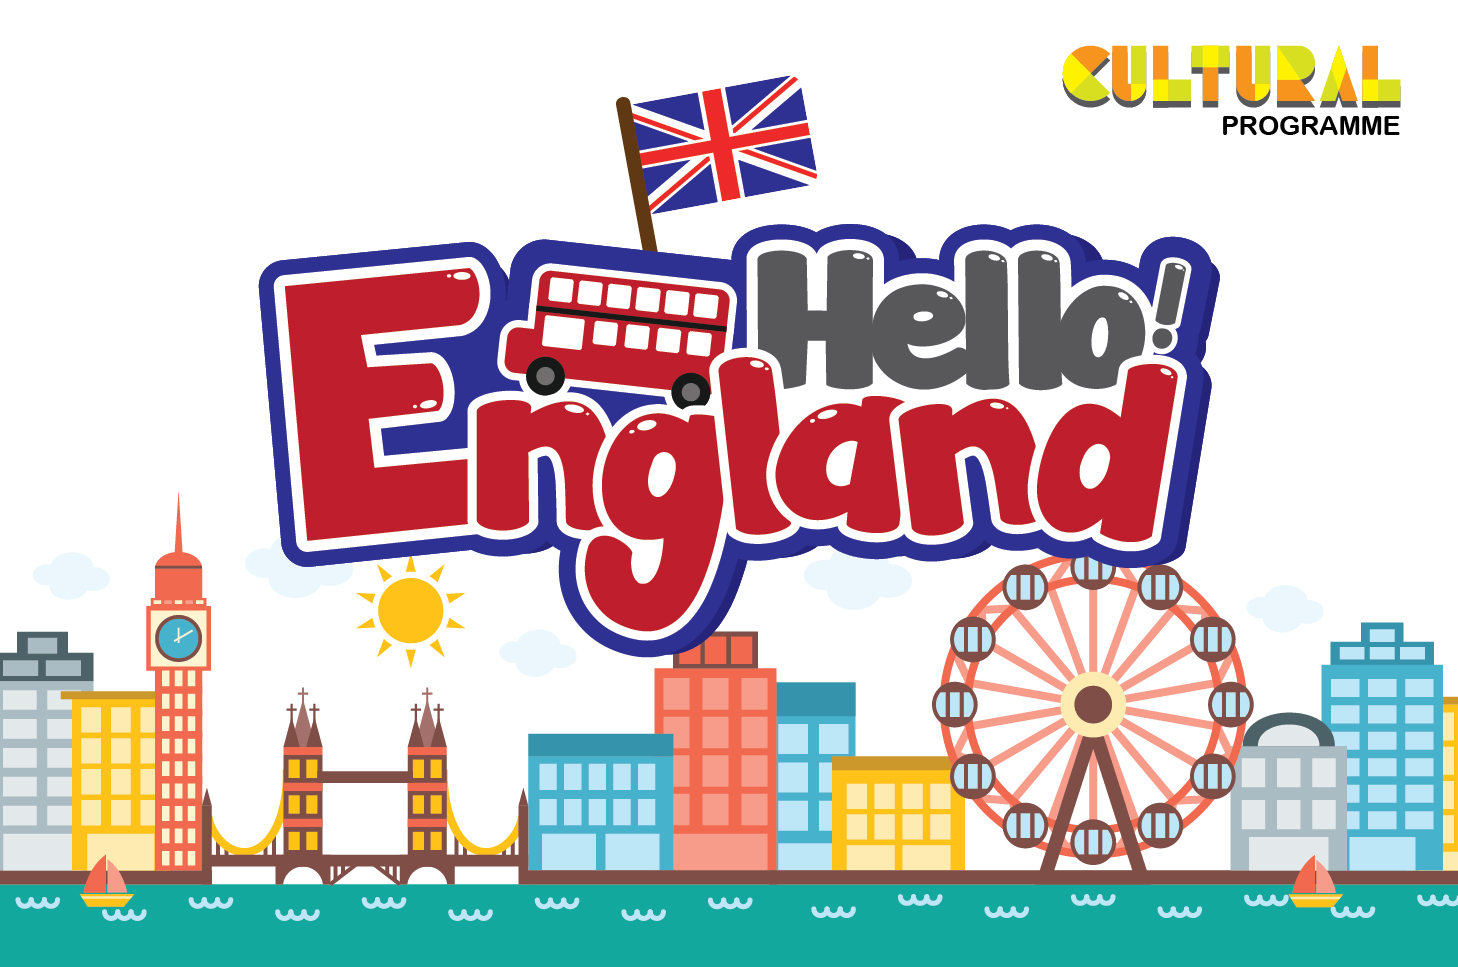 Cultural Programme – England